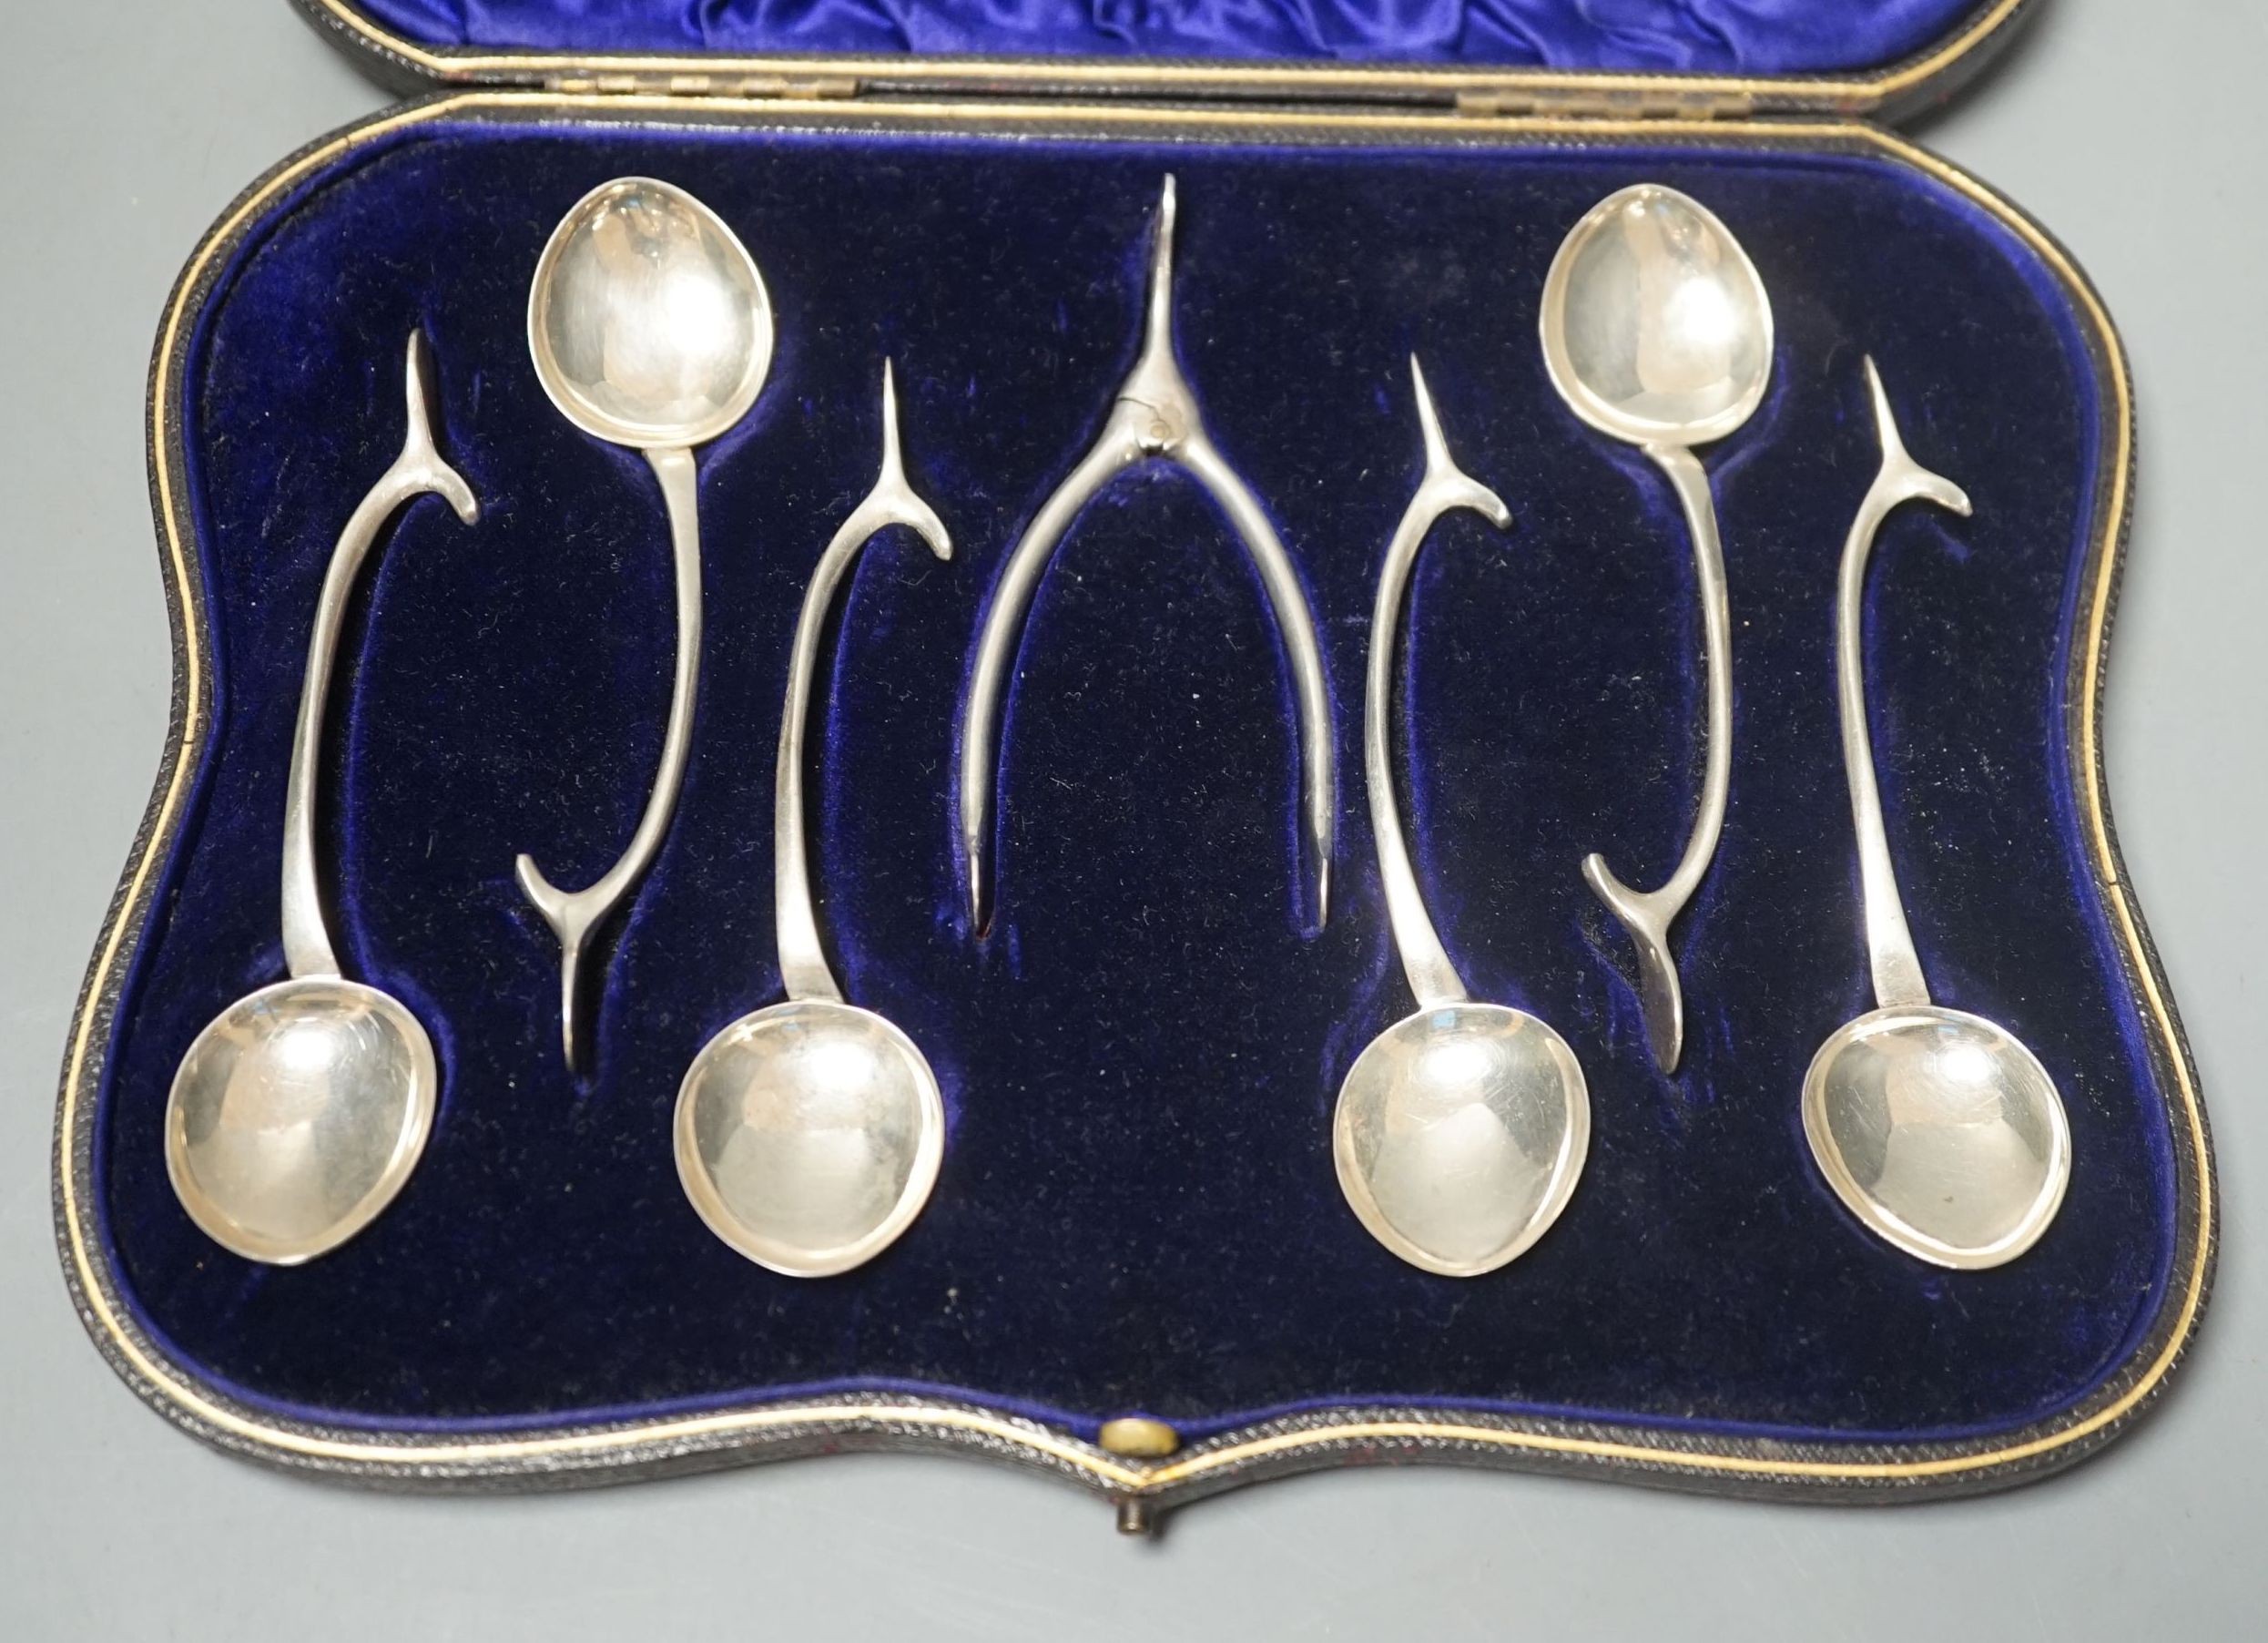 A novelty set of six Edwardian novelty silver wish bone handled teaspoons and matching sugar tongs, by William Hutton & Sons Ltd, Birmingham, 1905.